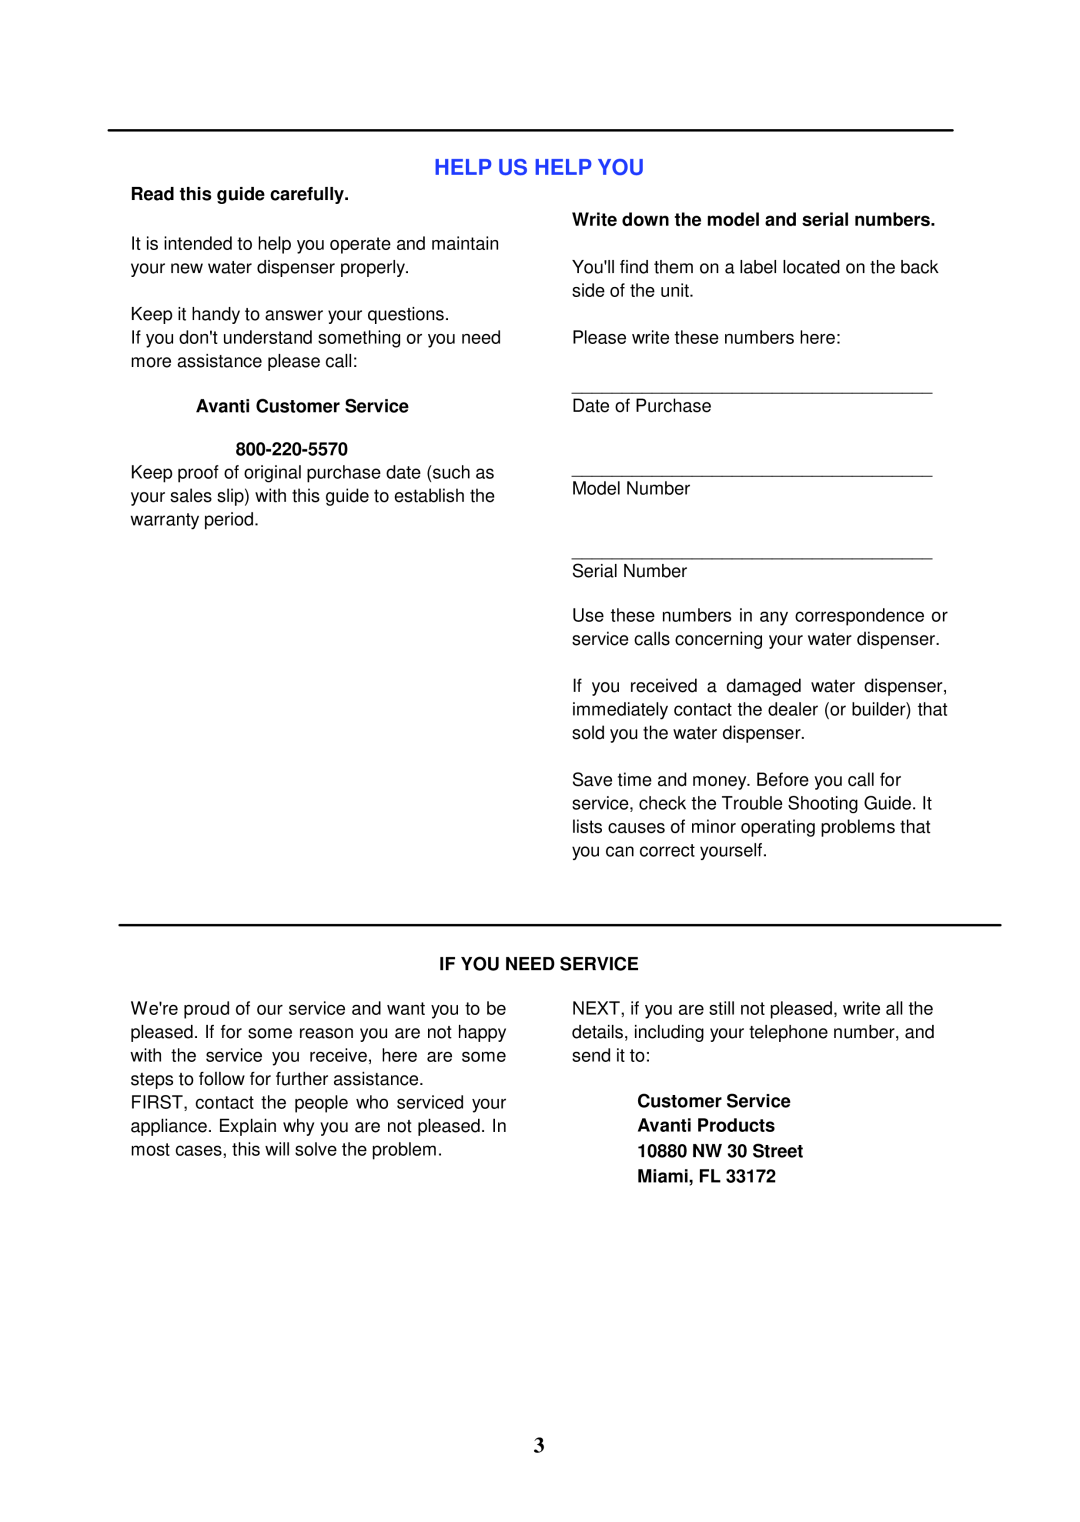 Avanti WDTZ000 instruction manual Help Us Help You, Read this guide carefully, Avanti Customer Service, If You Need Service 